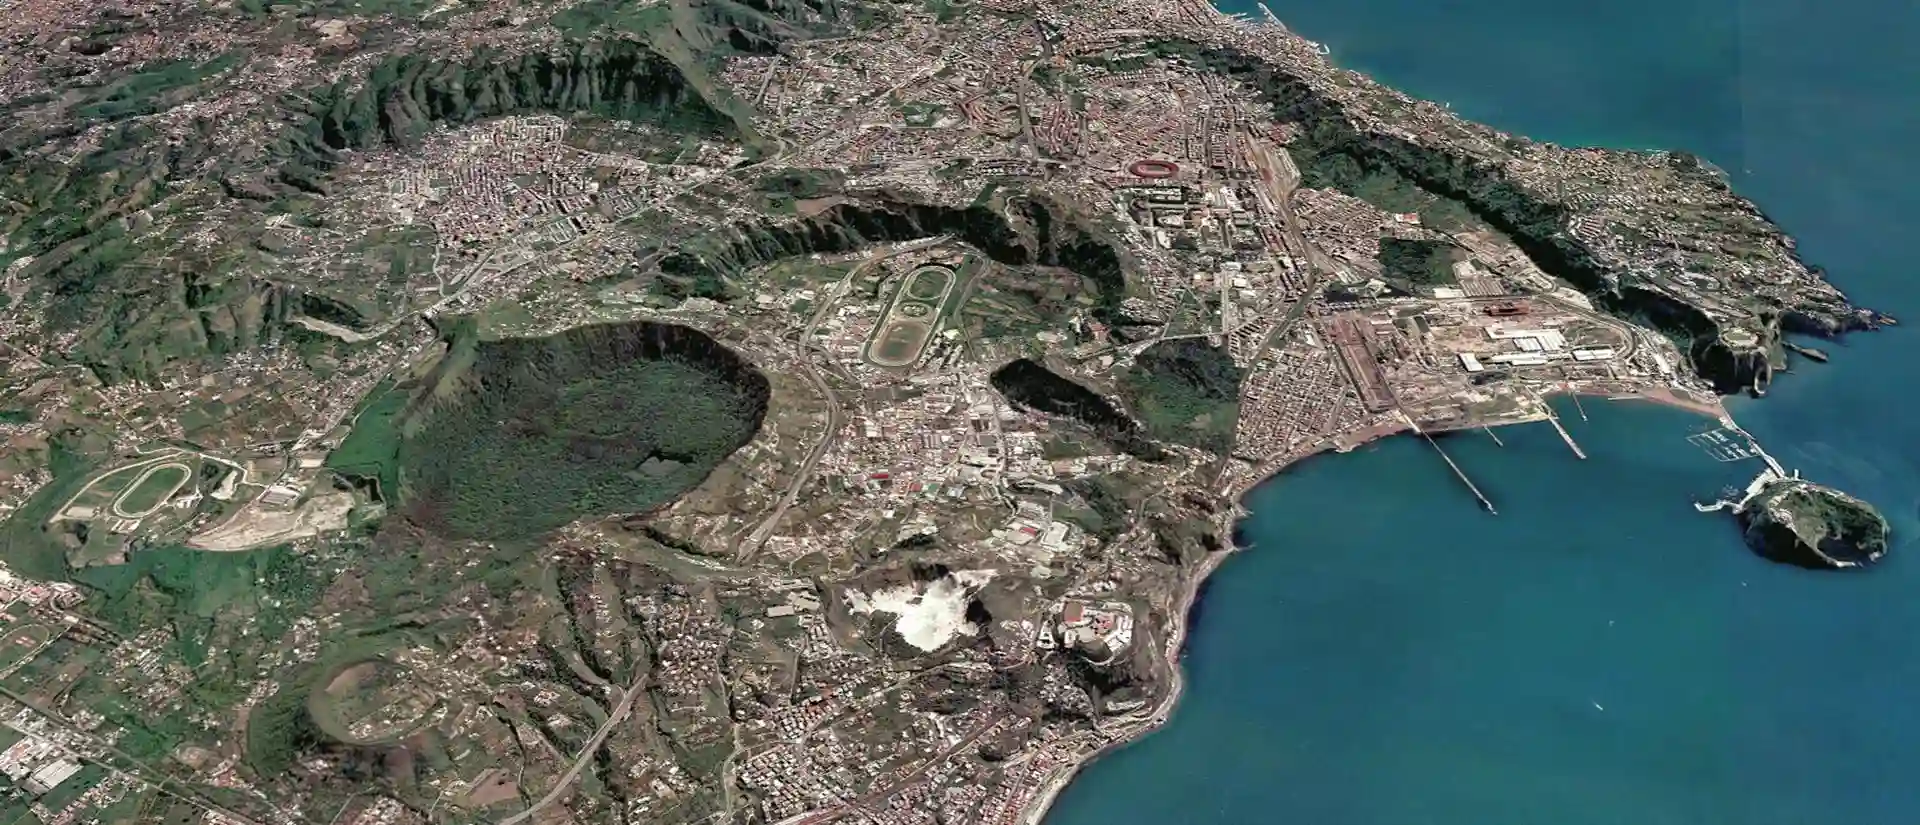 Múltiples cráteres volcánicos cubren el 'Campi Flegrei' cerca de Nápoles (Italia)